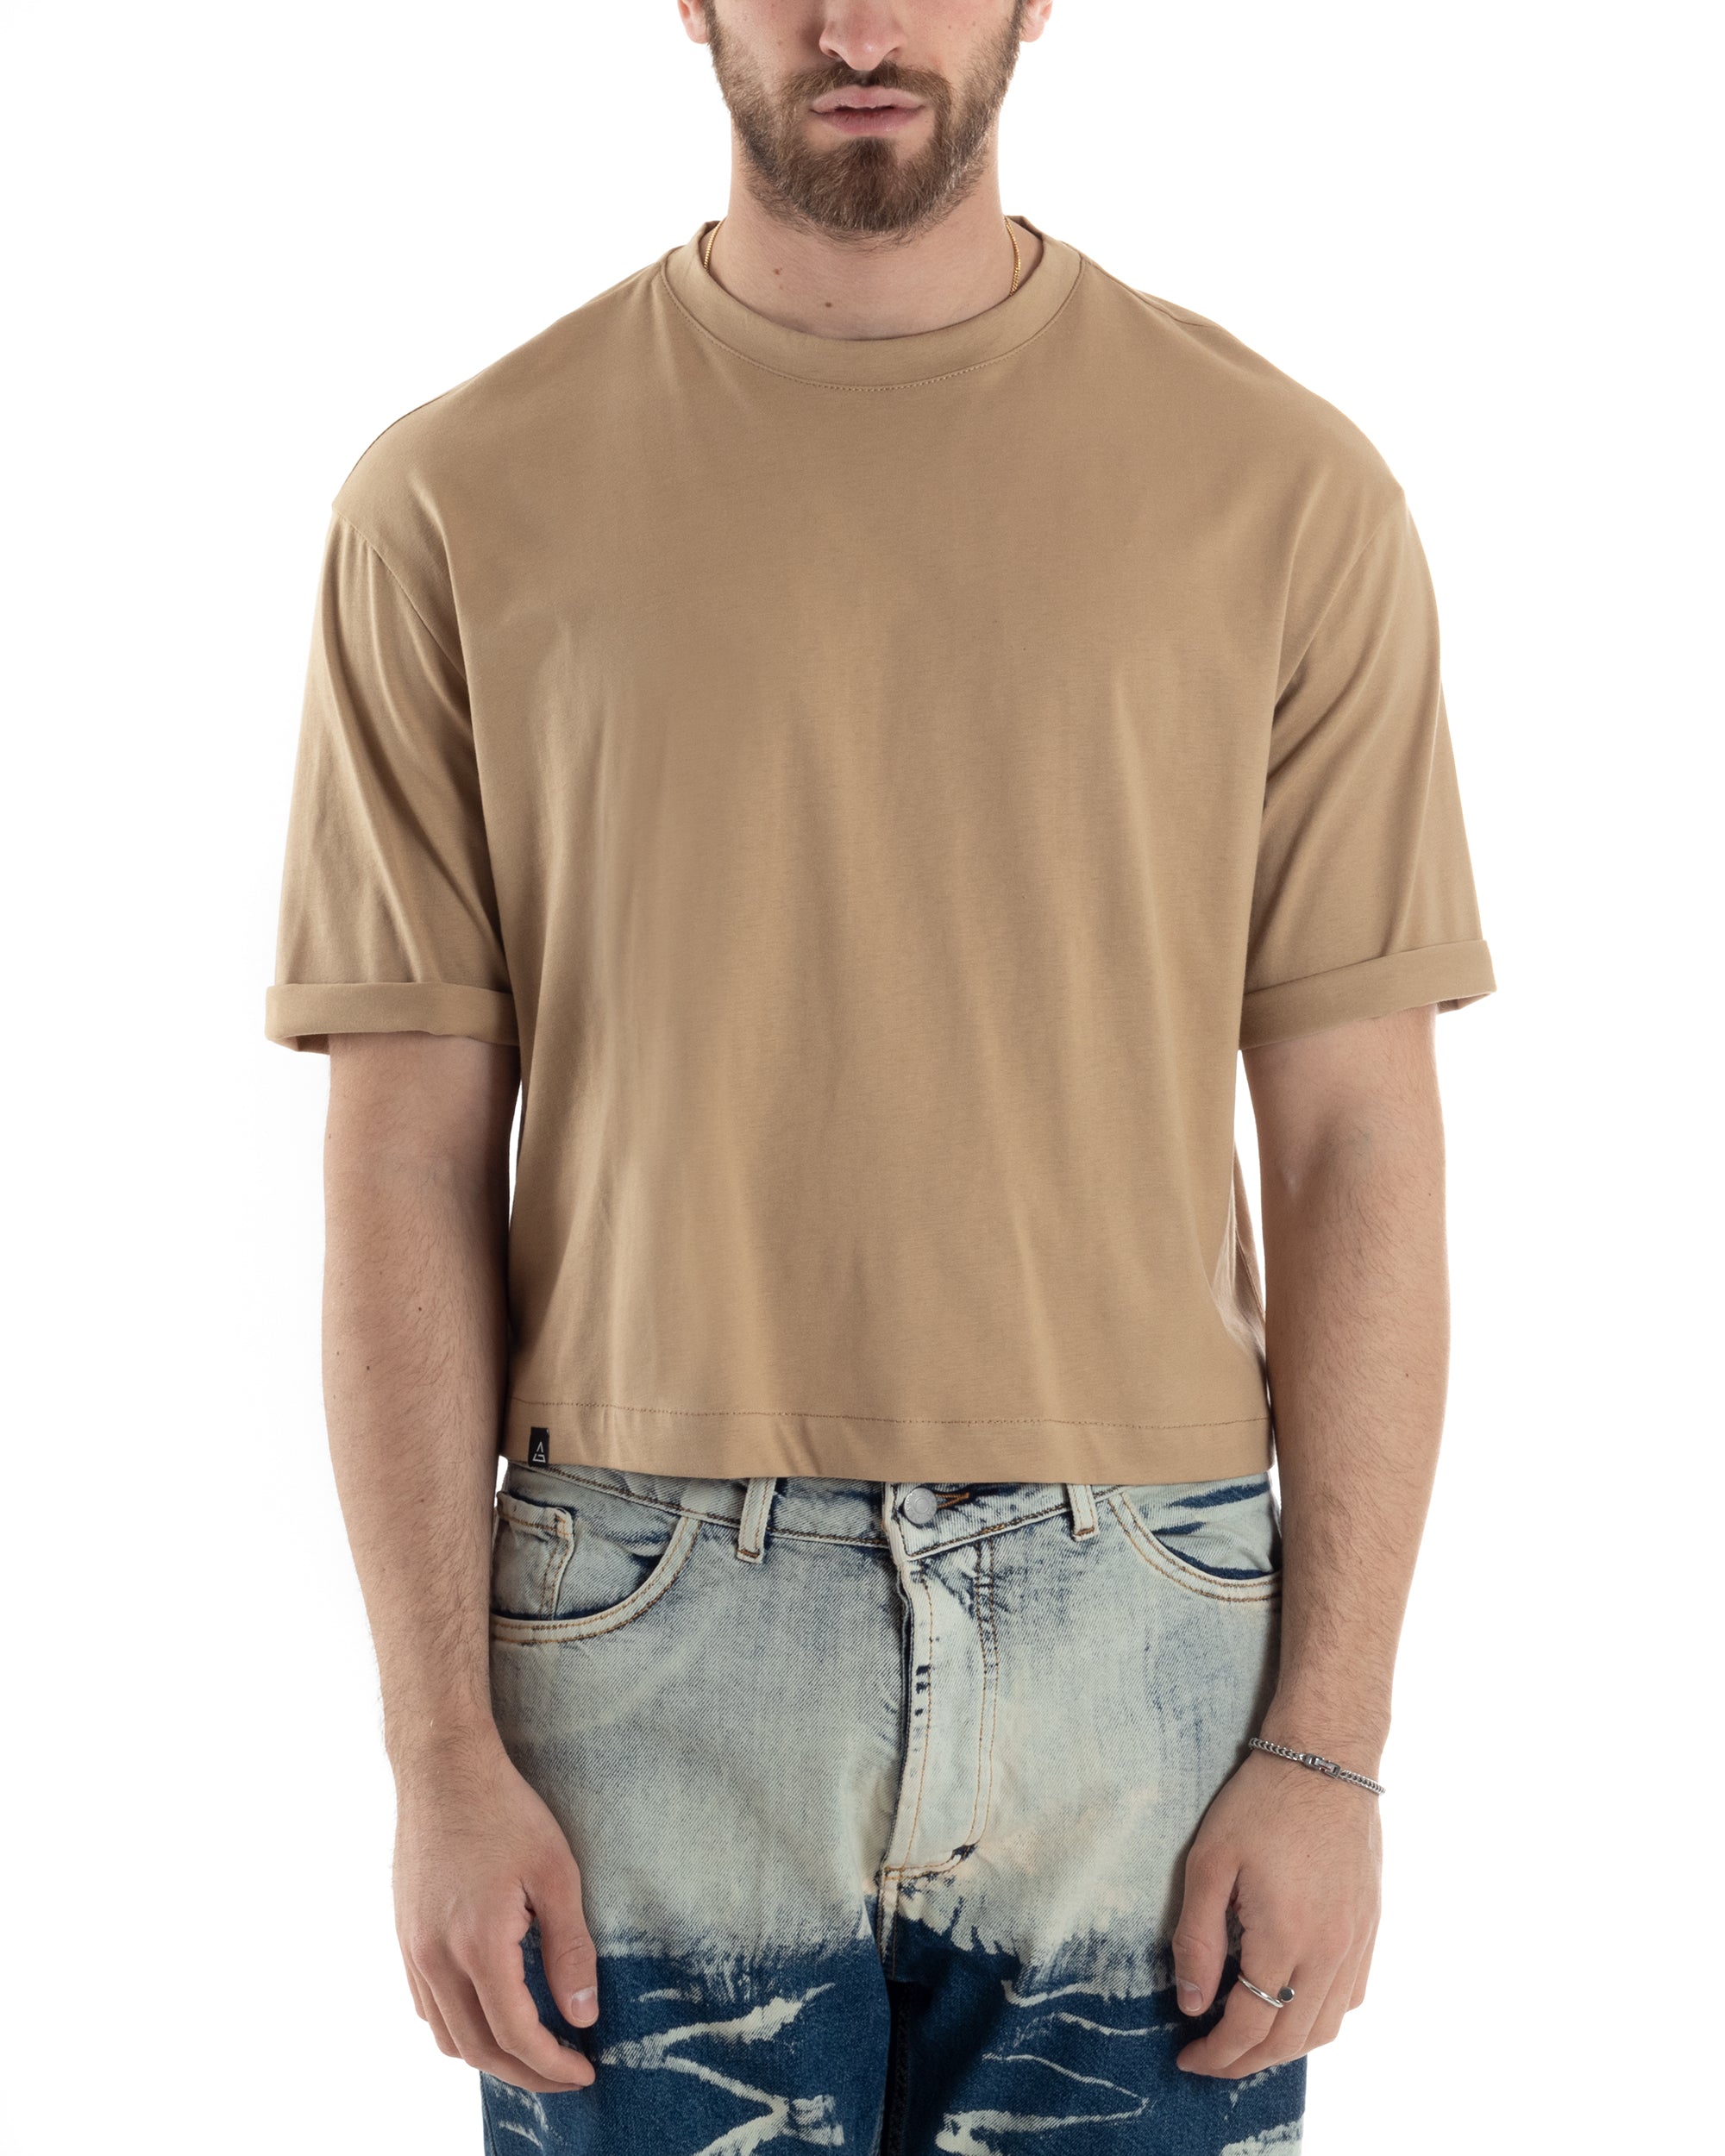 T-shirt Uomo Cropped Corta Boxy Fit Tinta Unita Camel Casual GIOSAL-TS3009A